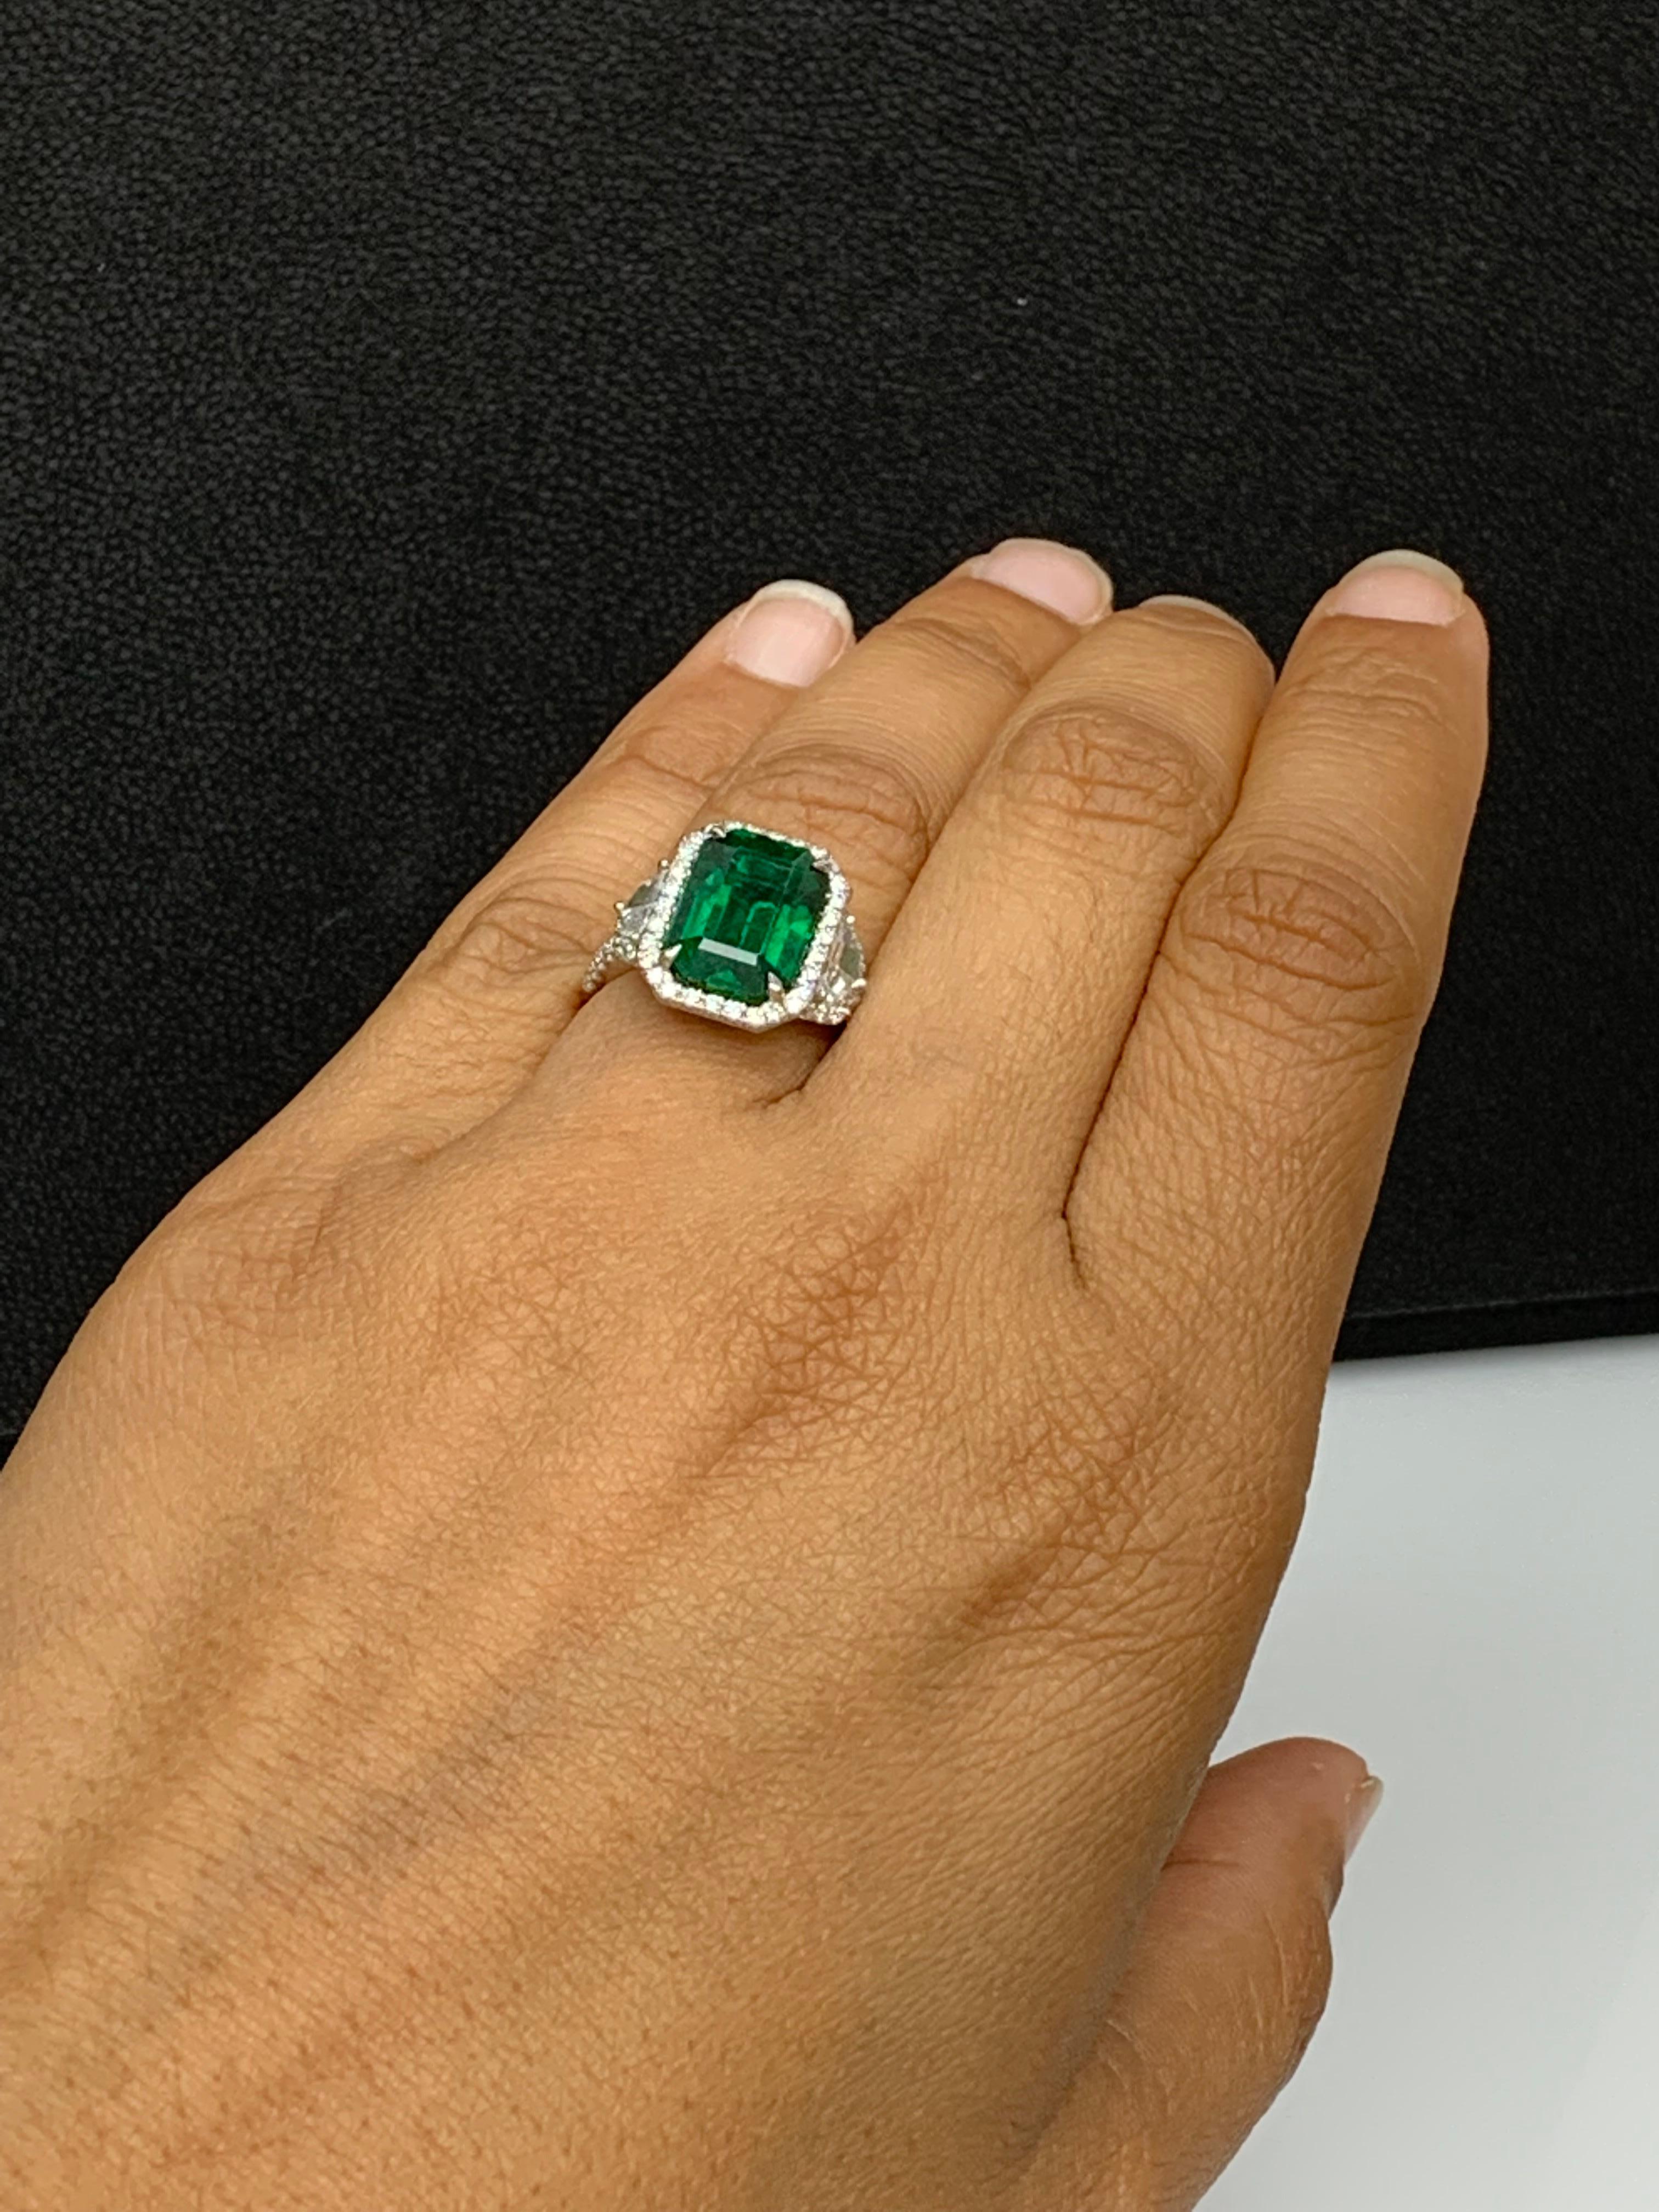 GIA Certified 4.07 Carat Emerald Cut Emerald Diamond 3 Stone Ring in Platinum For Sale 11